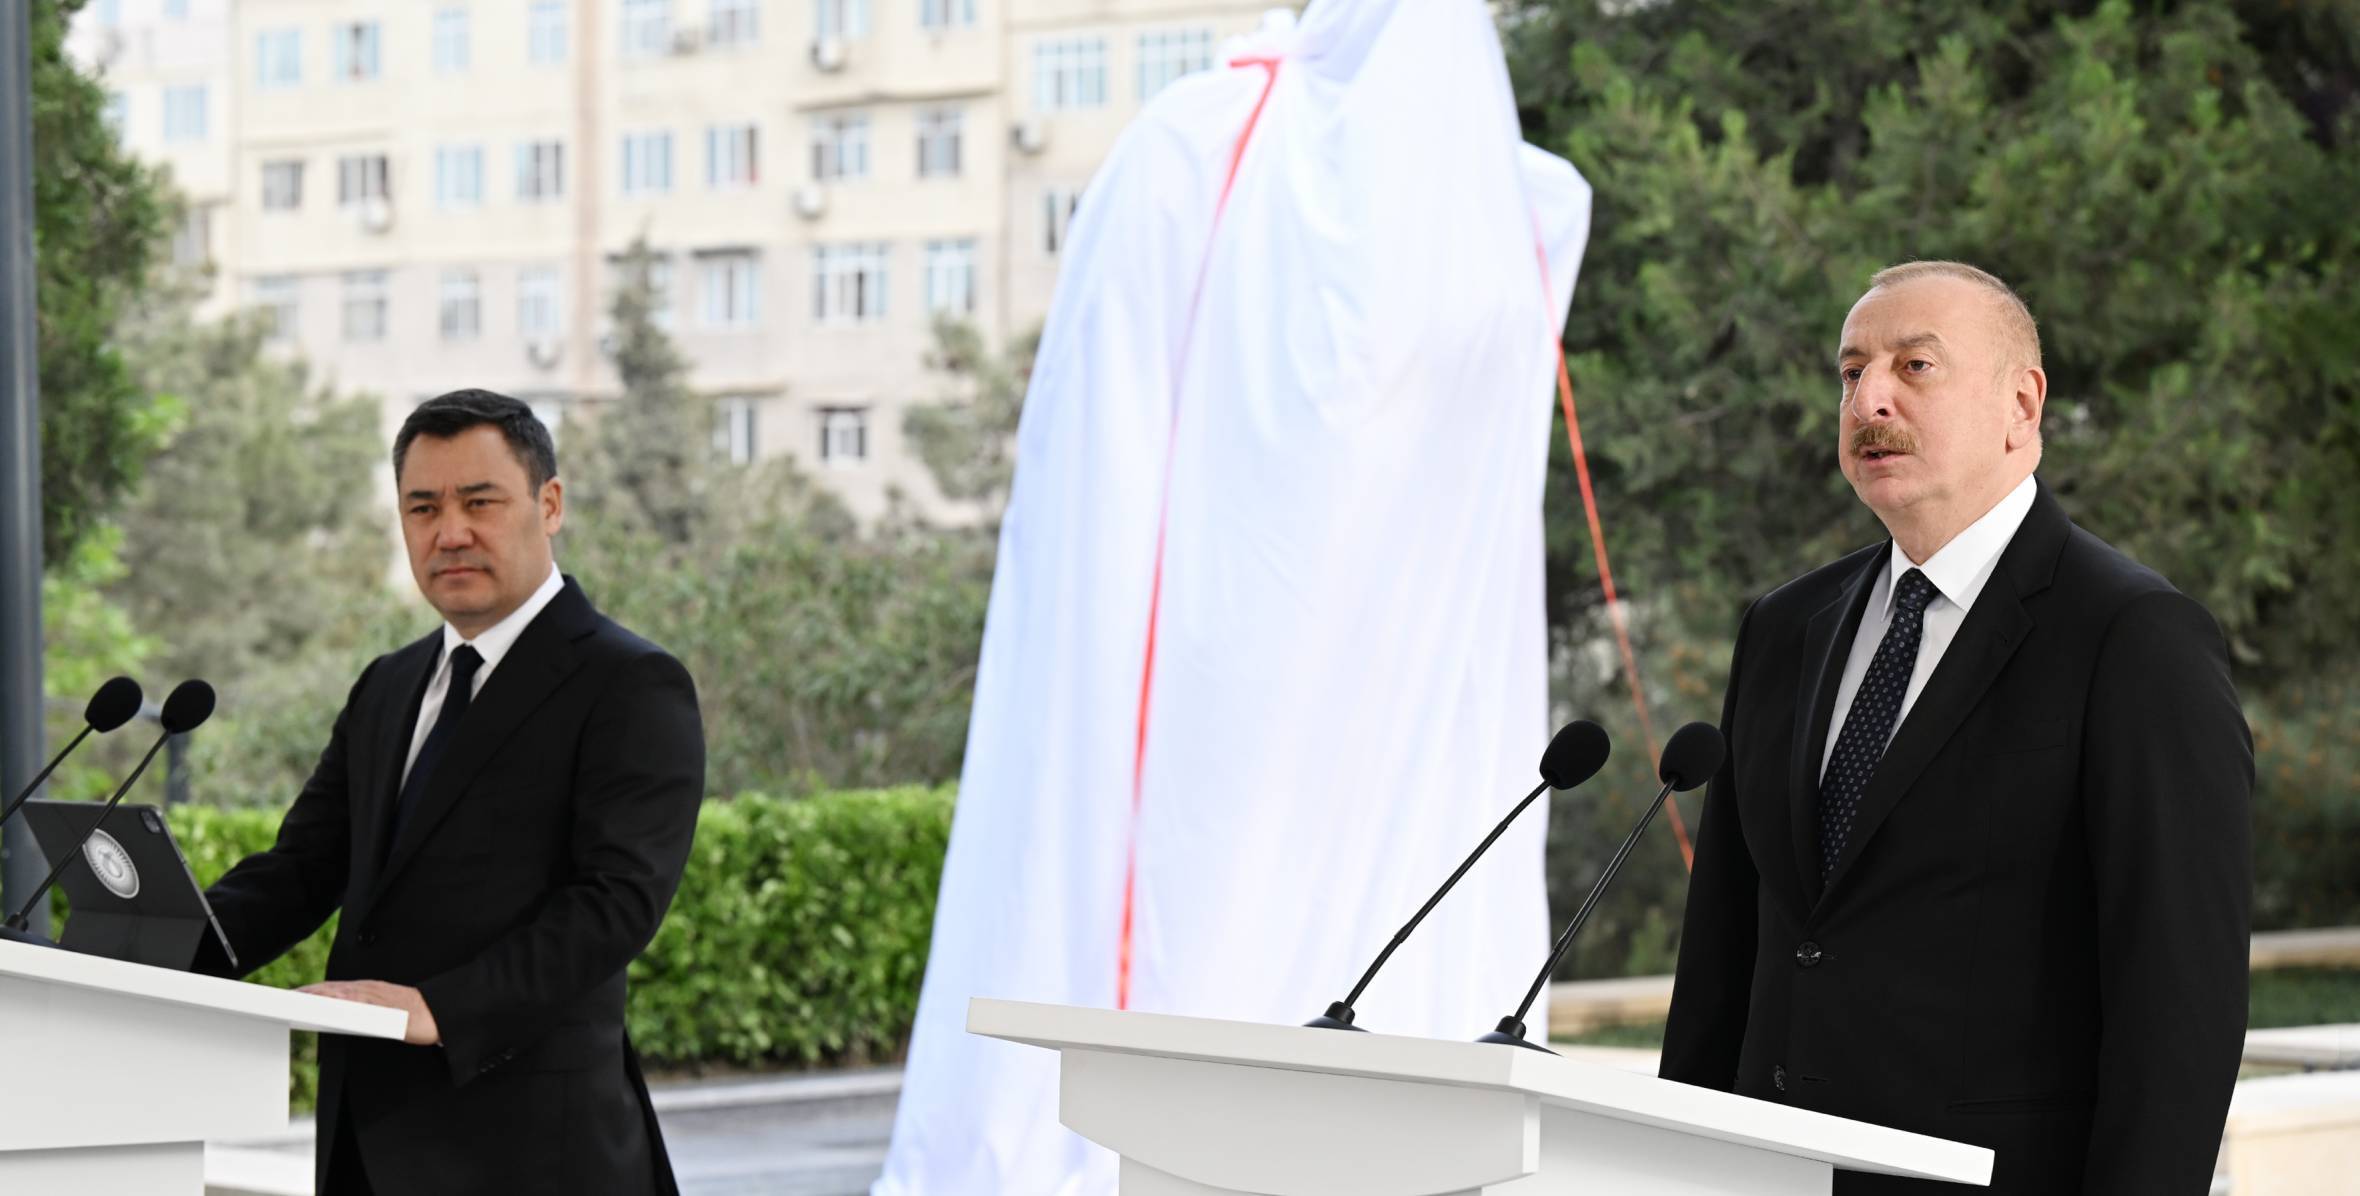 Speech by Ilham Aliyev at the opening ceremony of monument to Chingiz Aitmatov in Baku